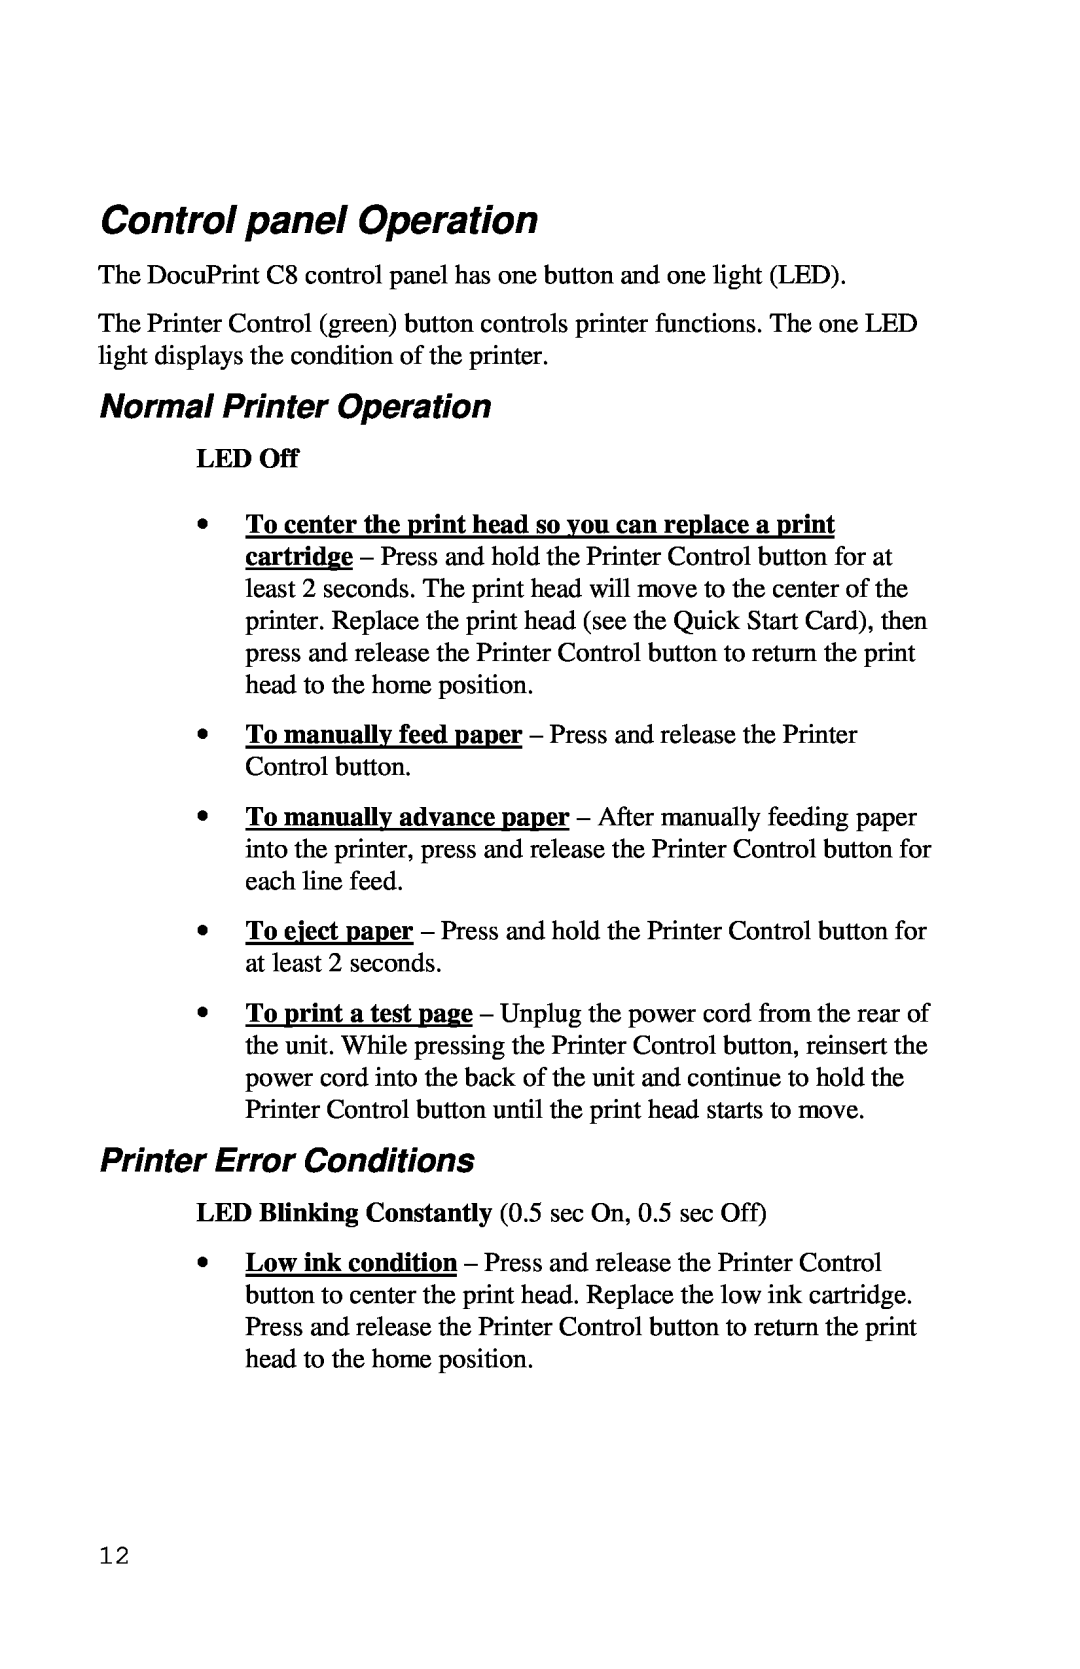 Xerox Inkjet Printer manual Control panel Operation, Normal Printer Operation, Printer Error Conditions, LED Off 